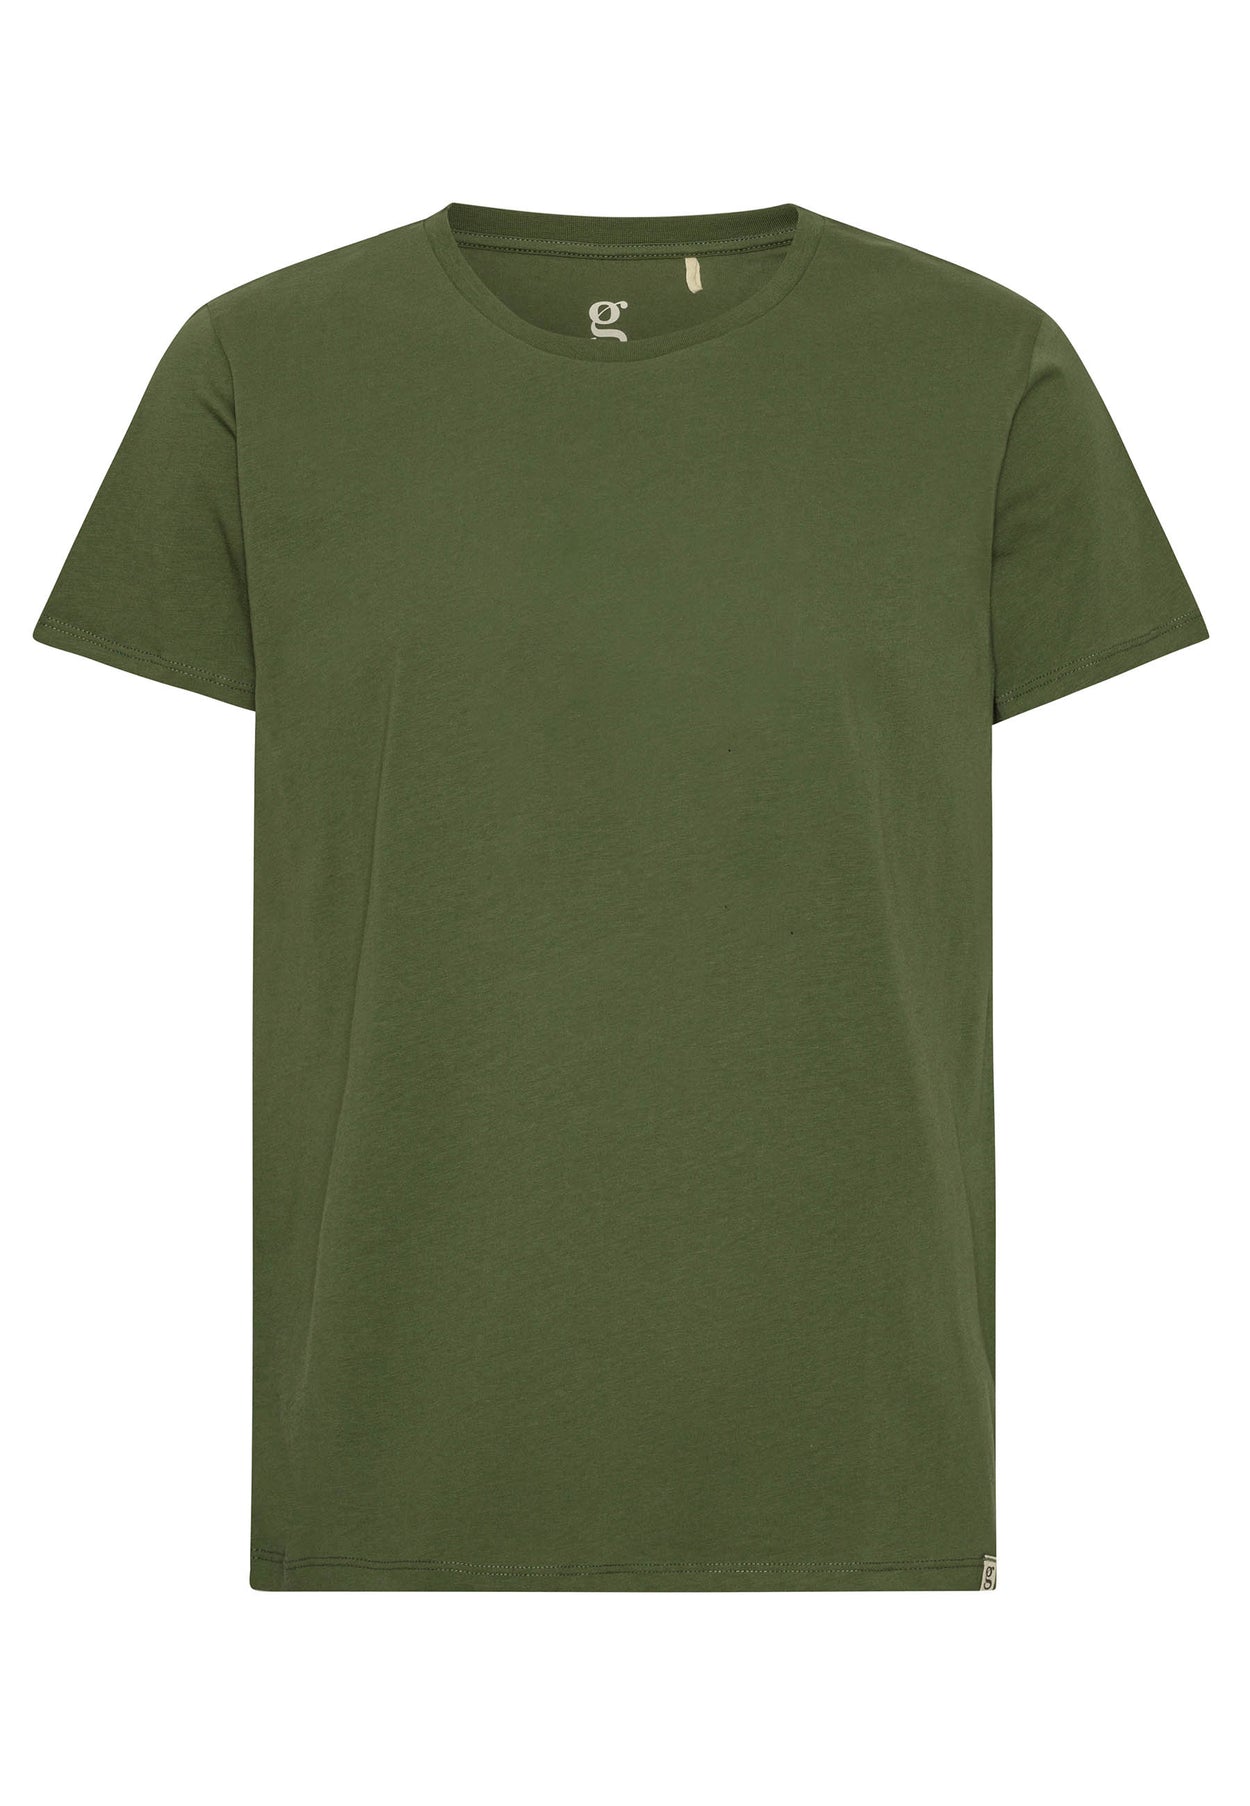 GROBUND Alfie t-shirte - den i mosgrøn